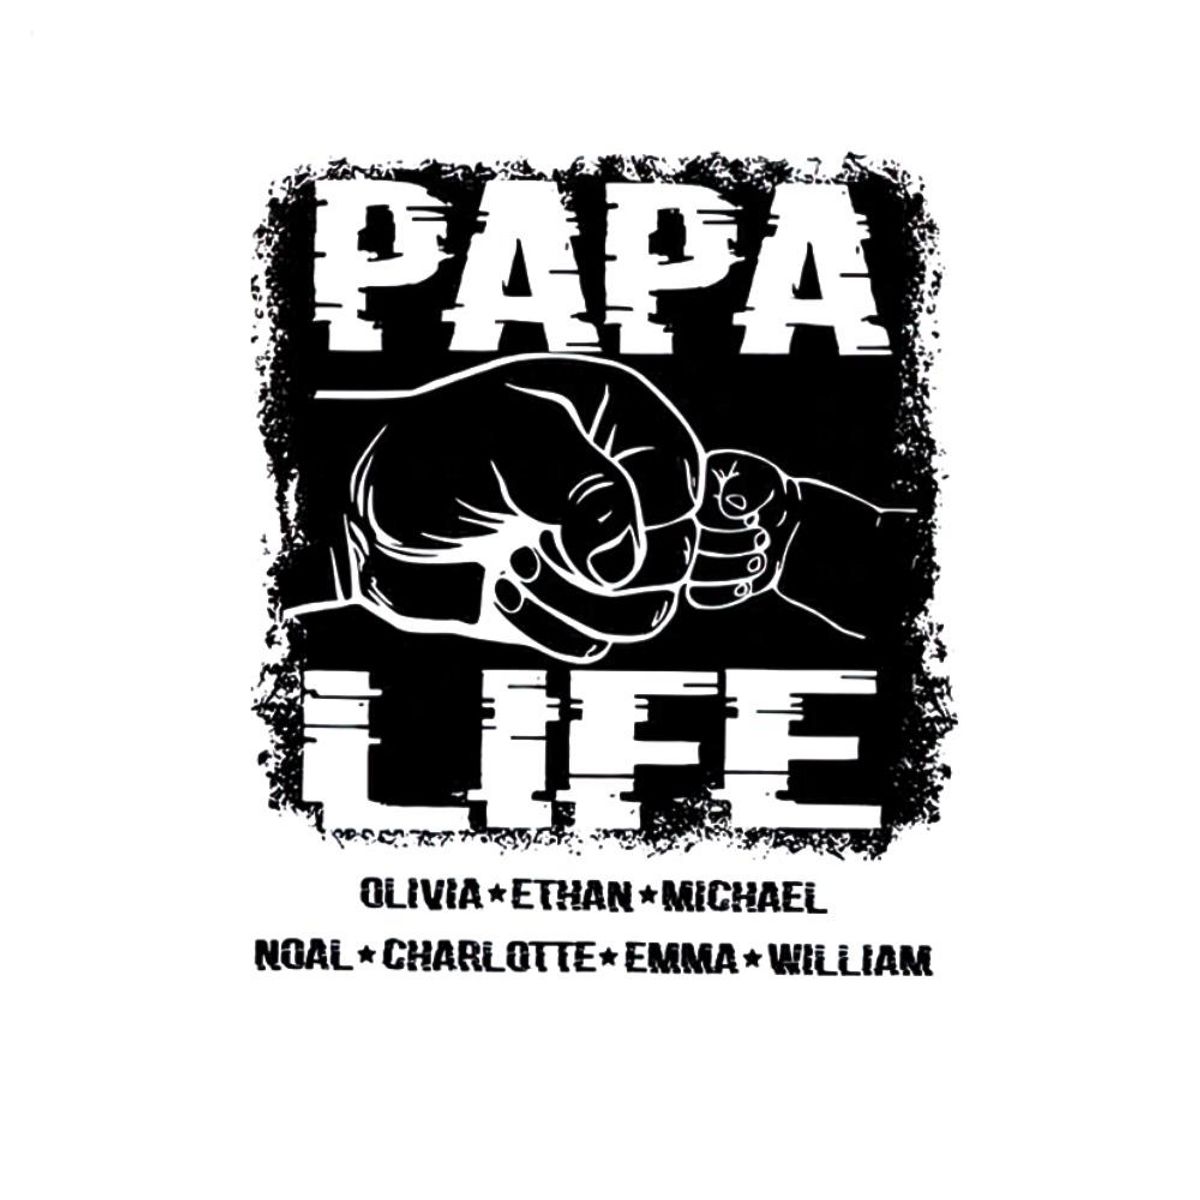 Lovelypod - Papa Life Shirt